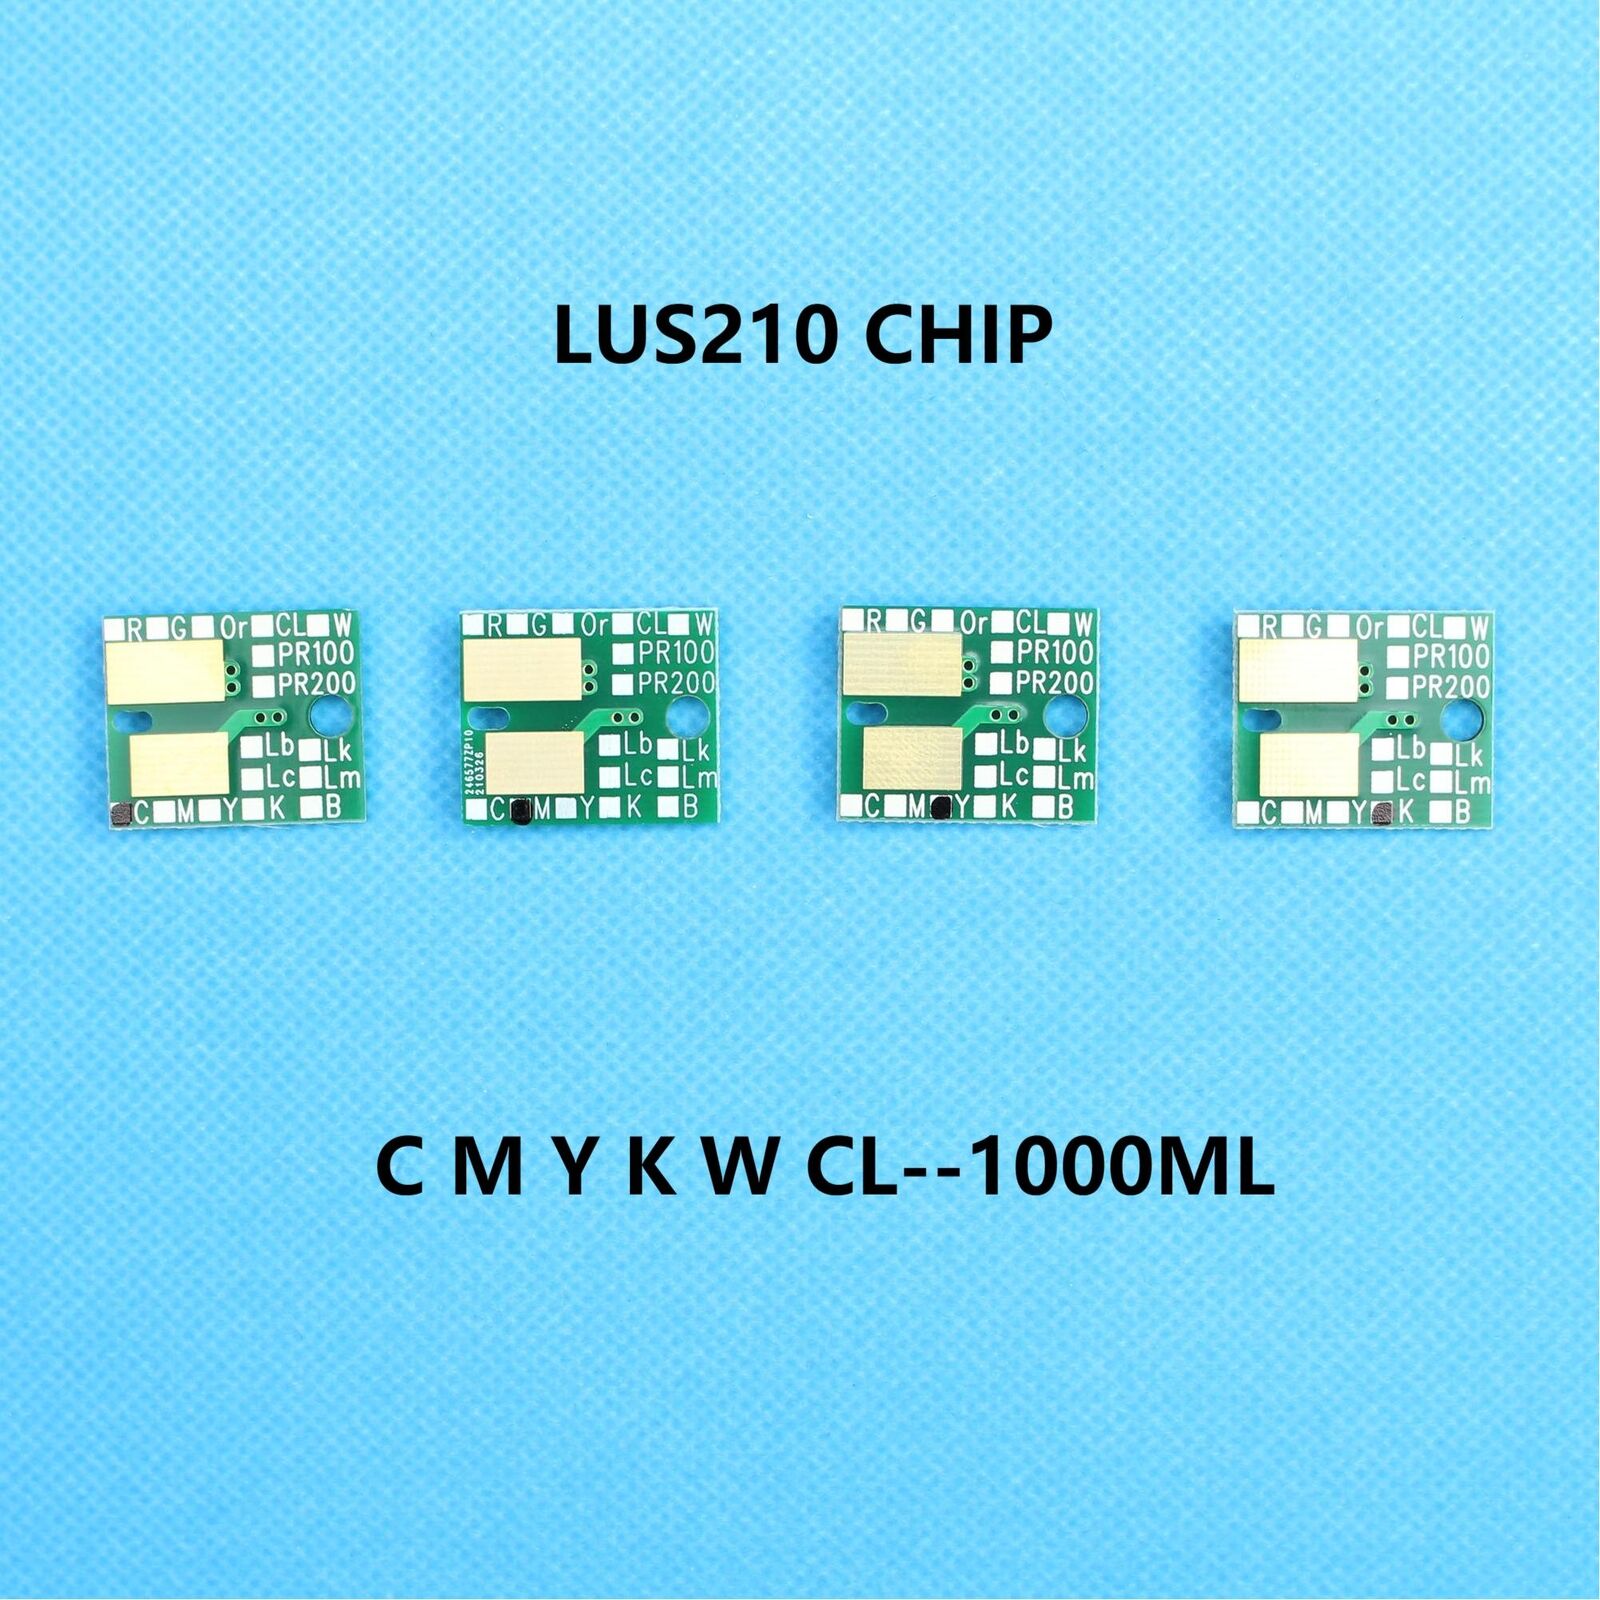 1000ml 6PC  Chip LUS210 UV Ink Chip for Mimaki UJV100-160 Printer